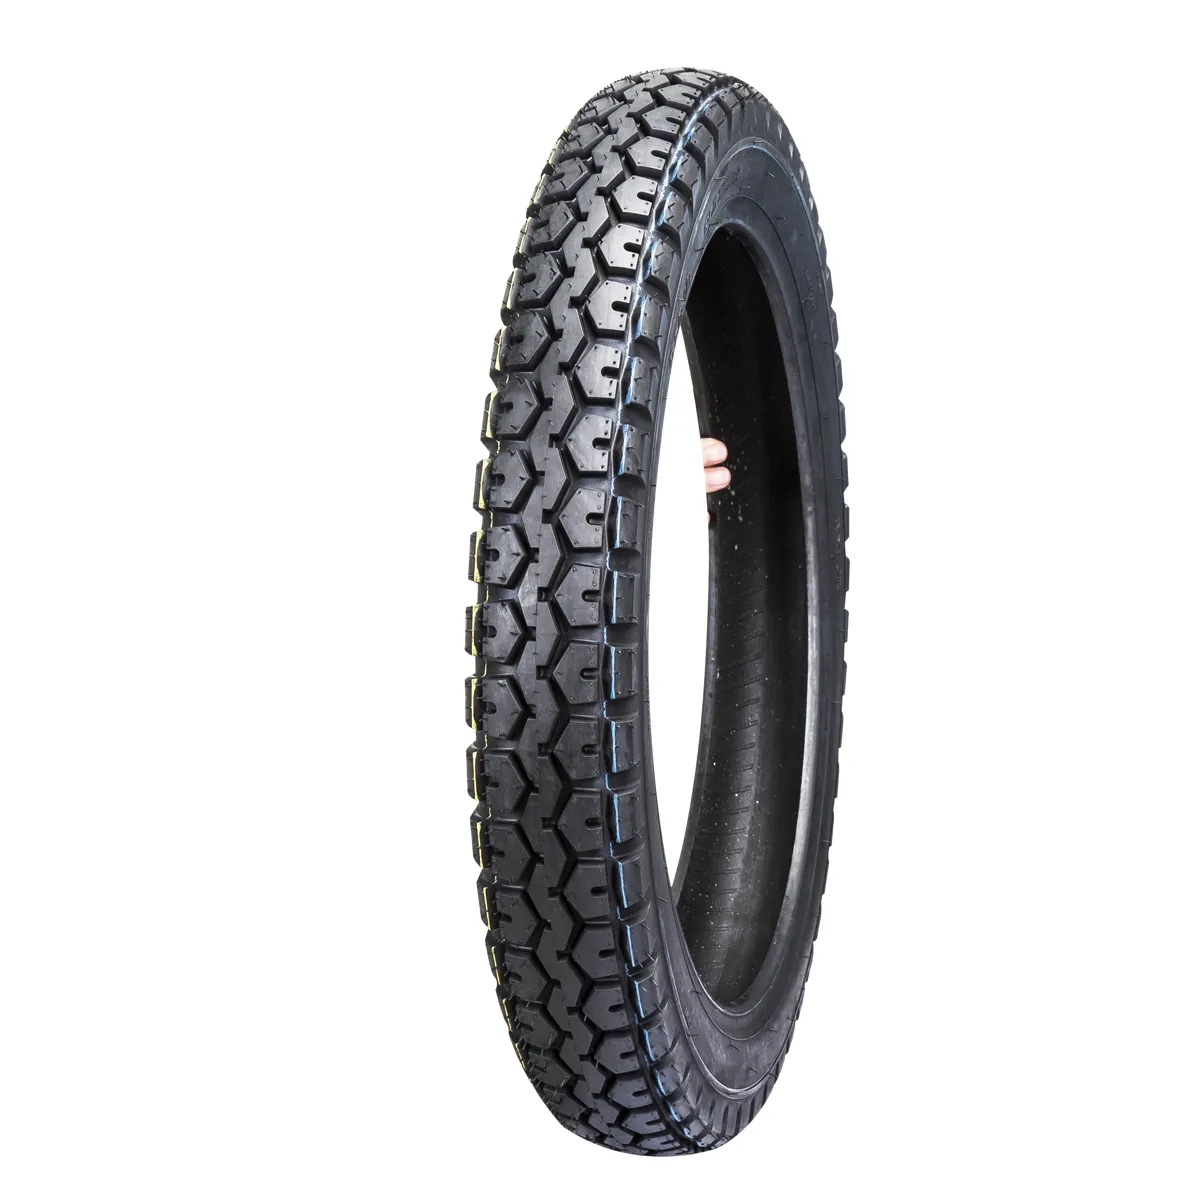 Fabbrica di buona qualità direttamente pneumatici per moto 130/70-10 ruote pneumatici per tubi pneumatici per tubi per moto 2.75-17 275-17 100/90-18